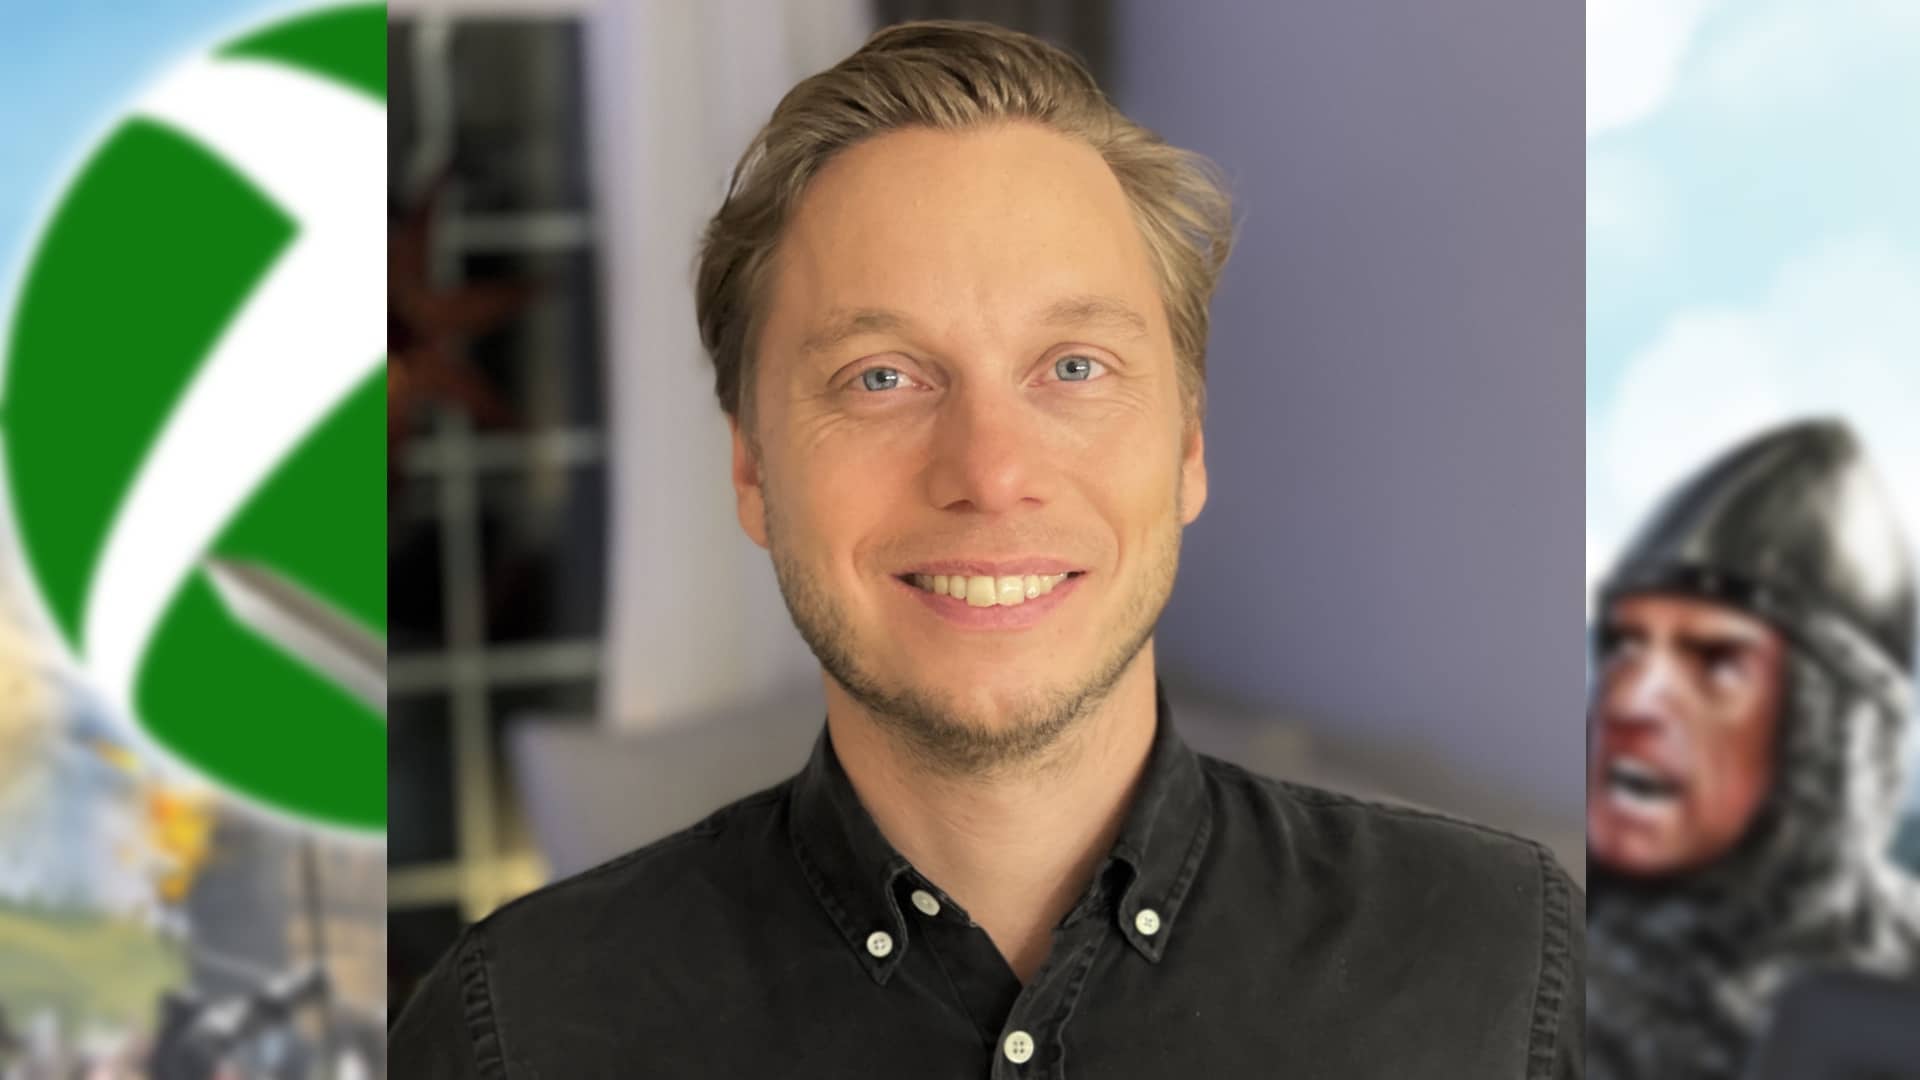 Johan Bolin è Chief Marketing Officer di Paradox Interactive.